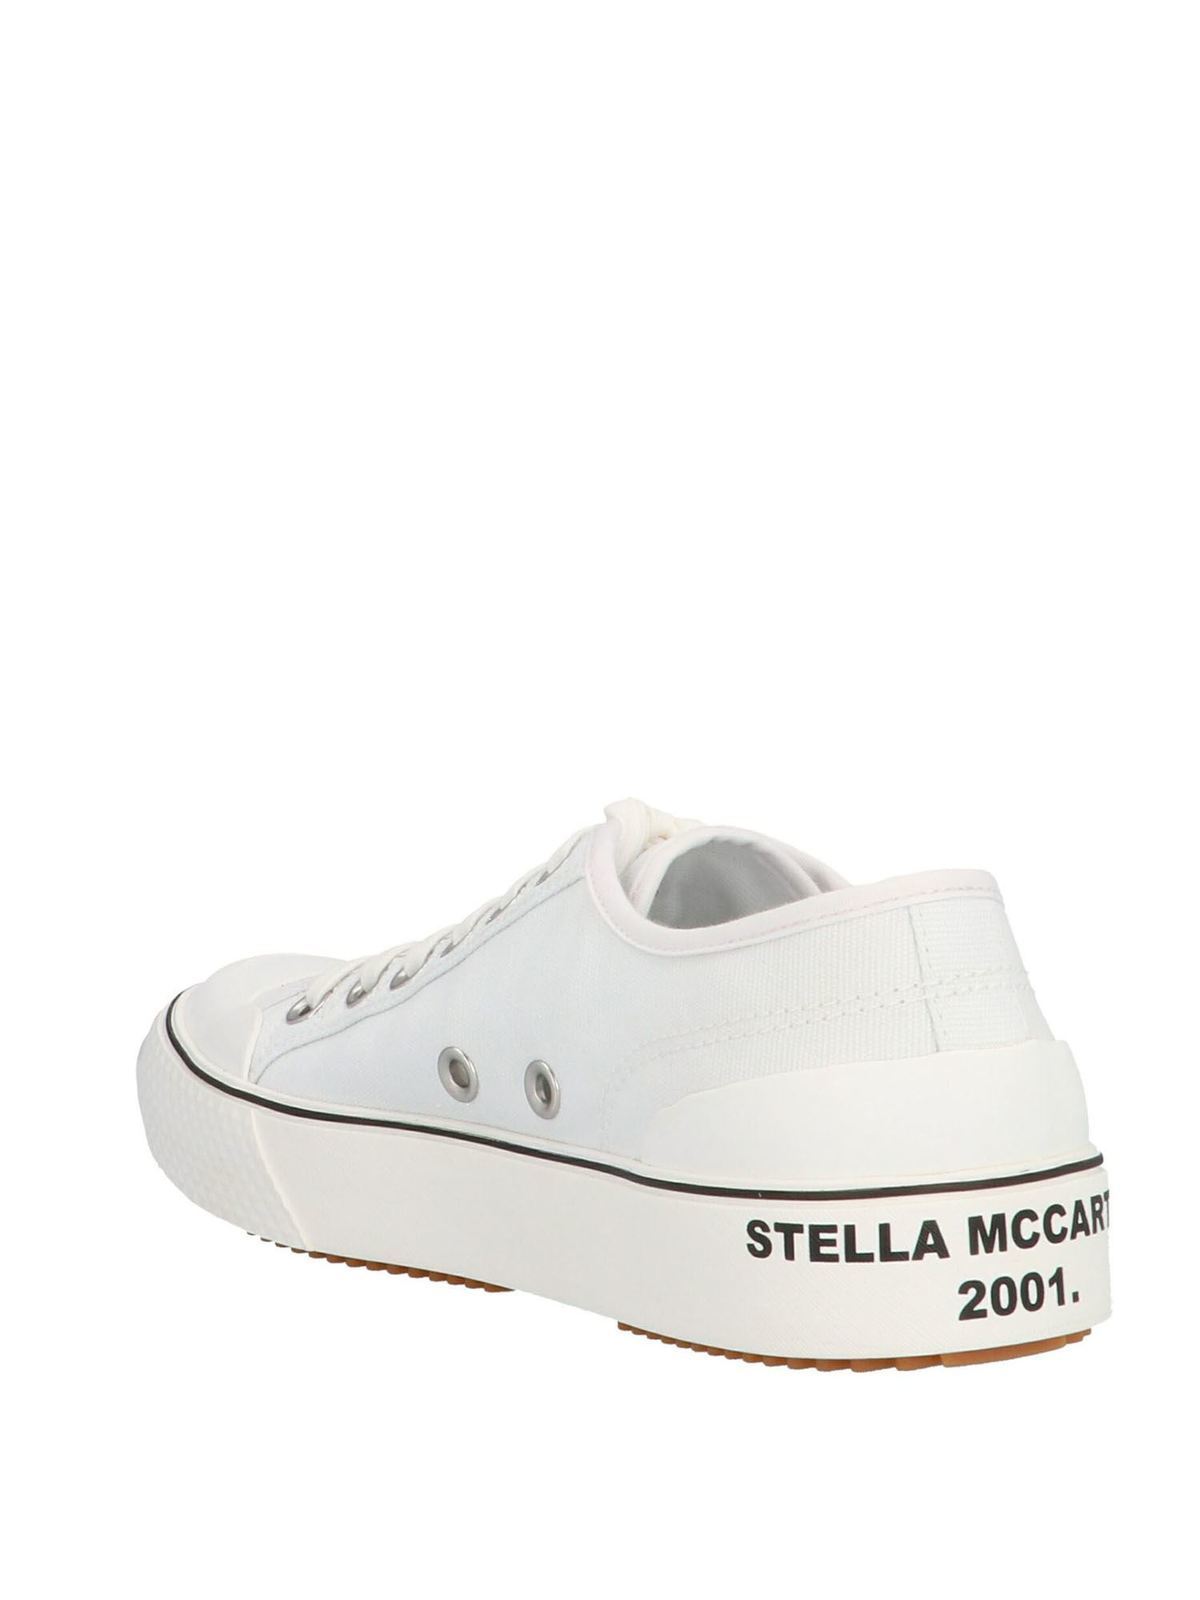 stella mccartney trainers white